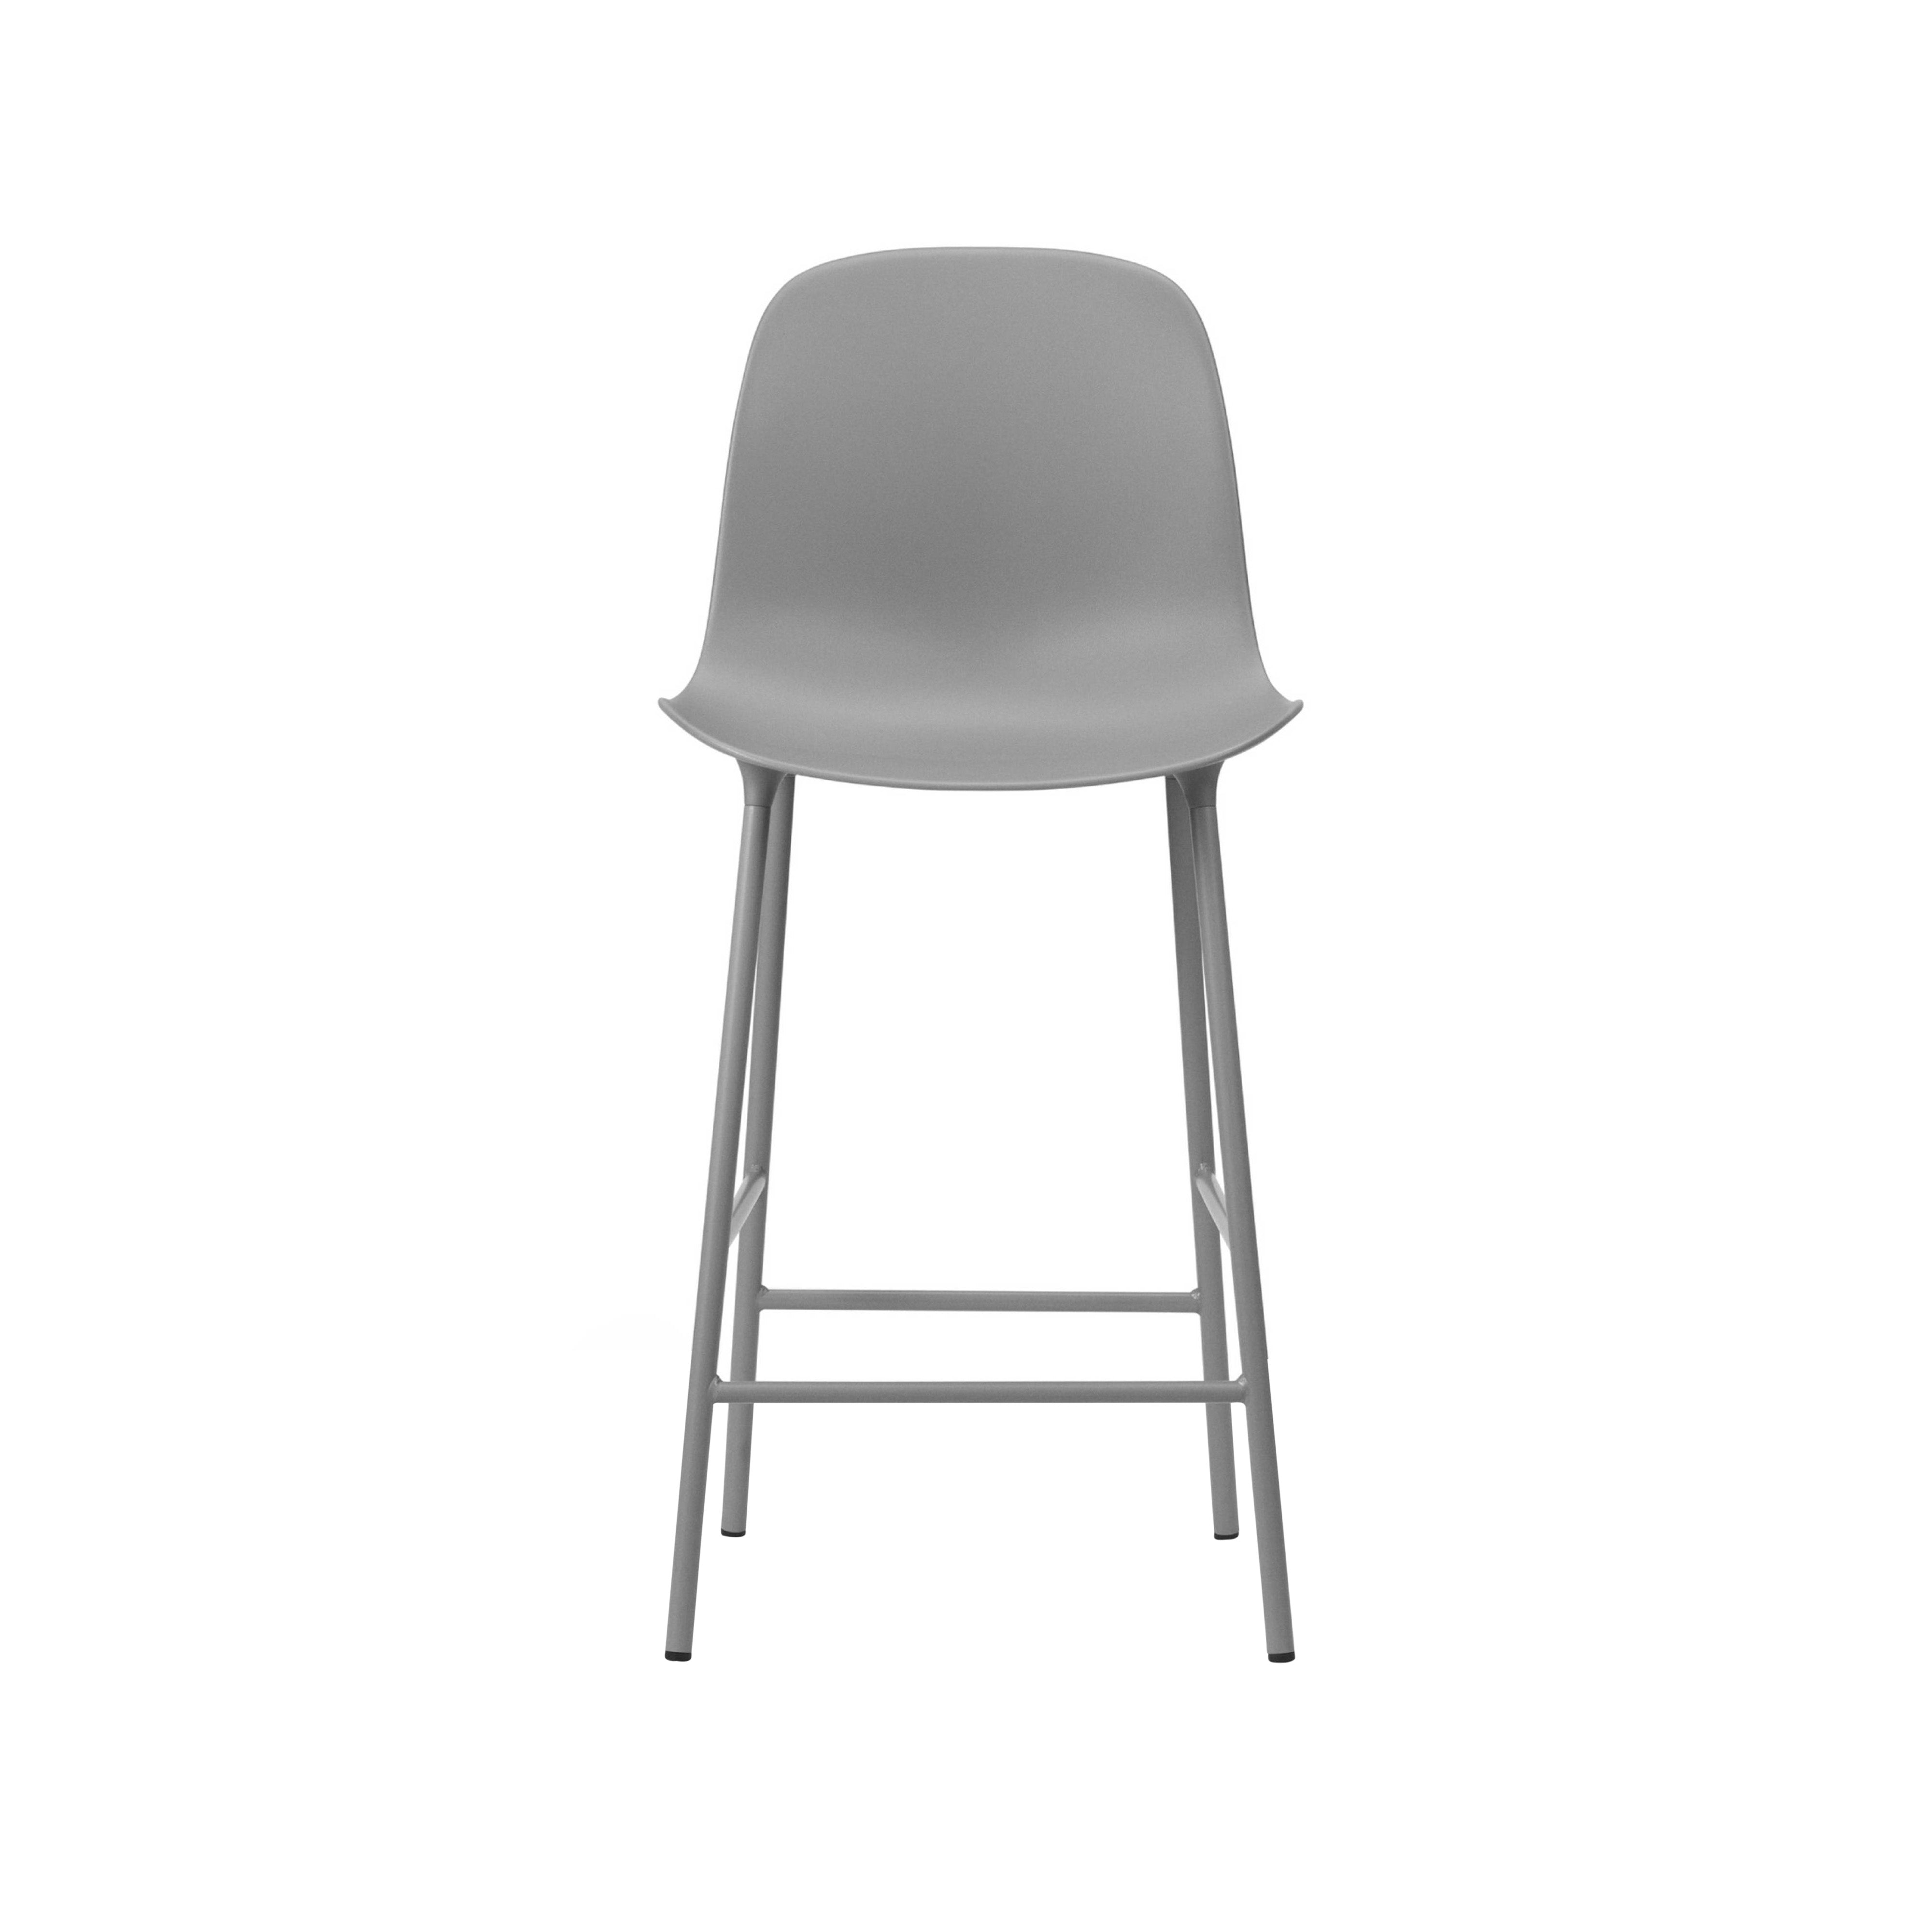 Form Bar + Counter Chair: Counter + Grey